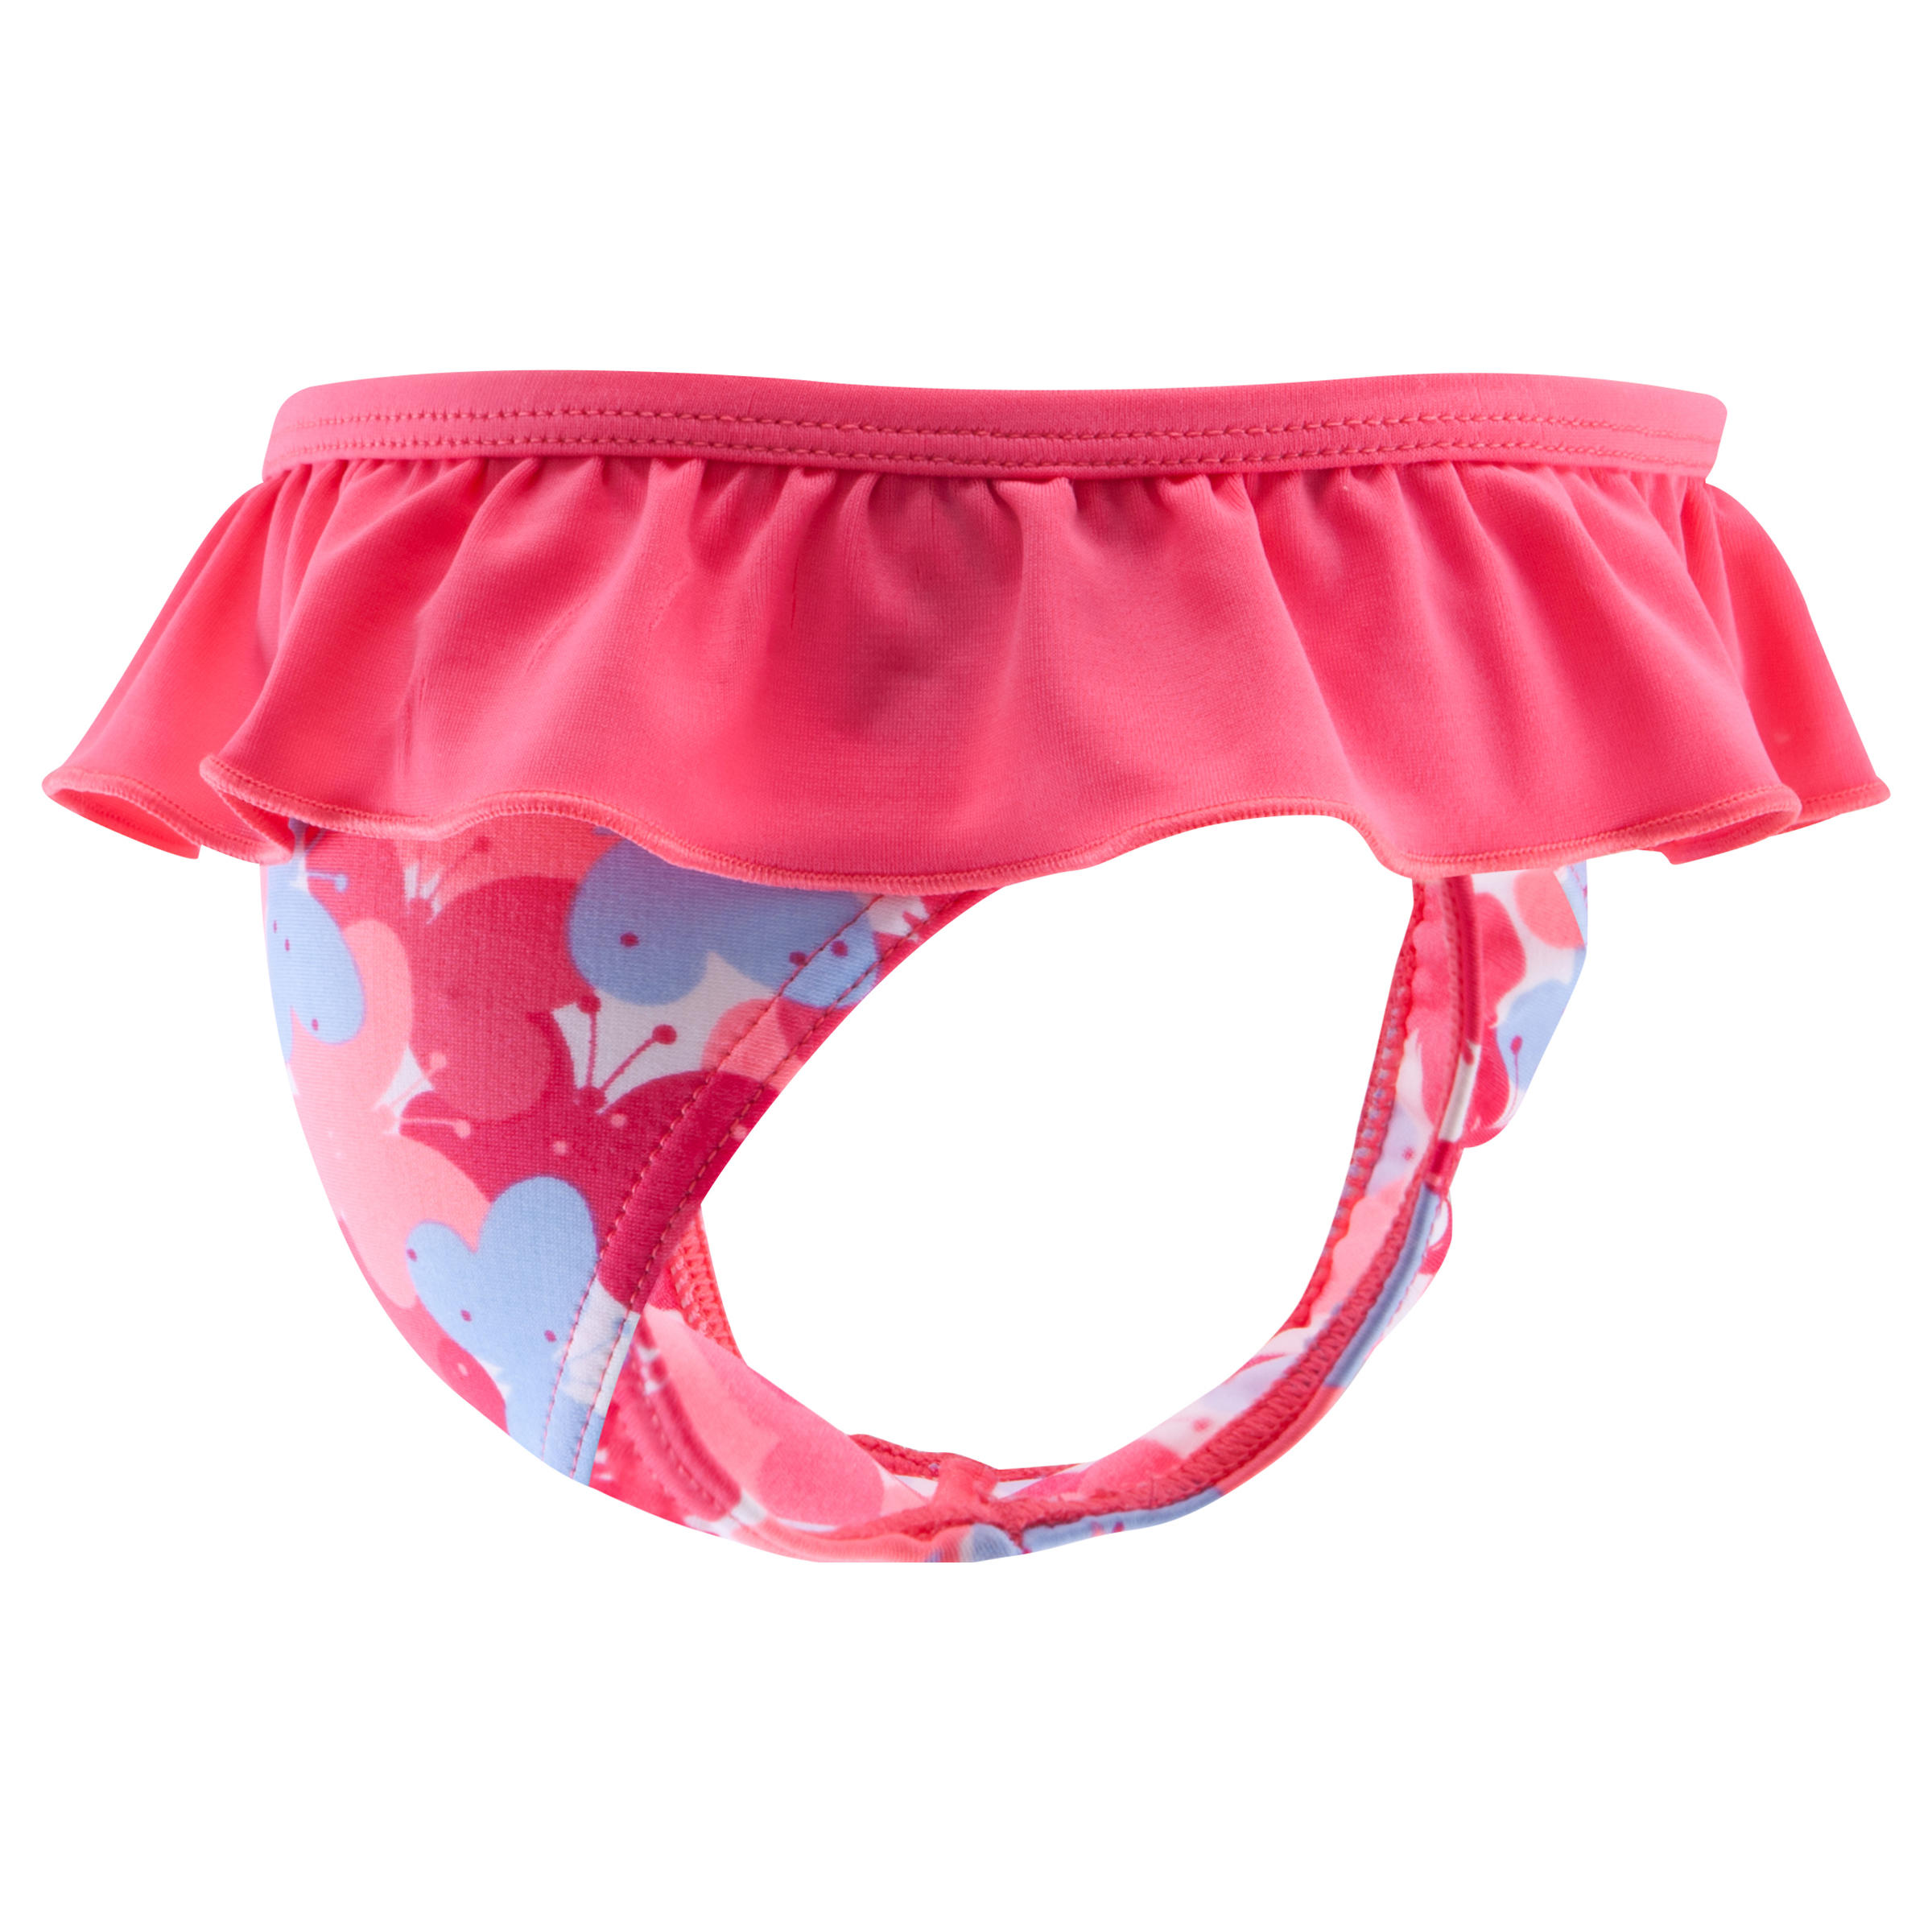 Baby Girls' One-Piece Swim Briefs pink butterfly print 4/6